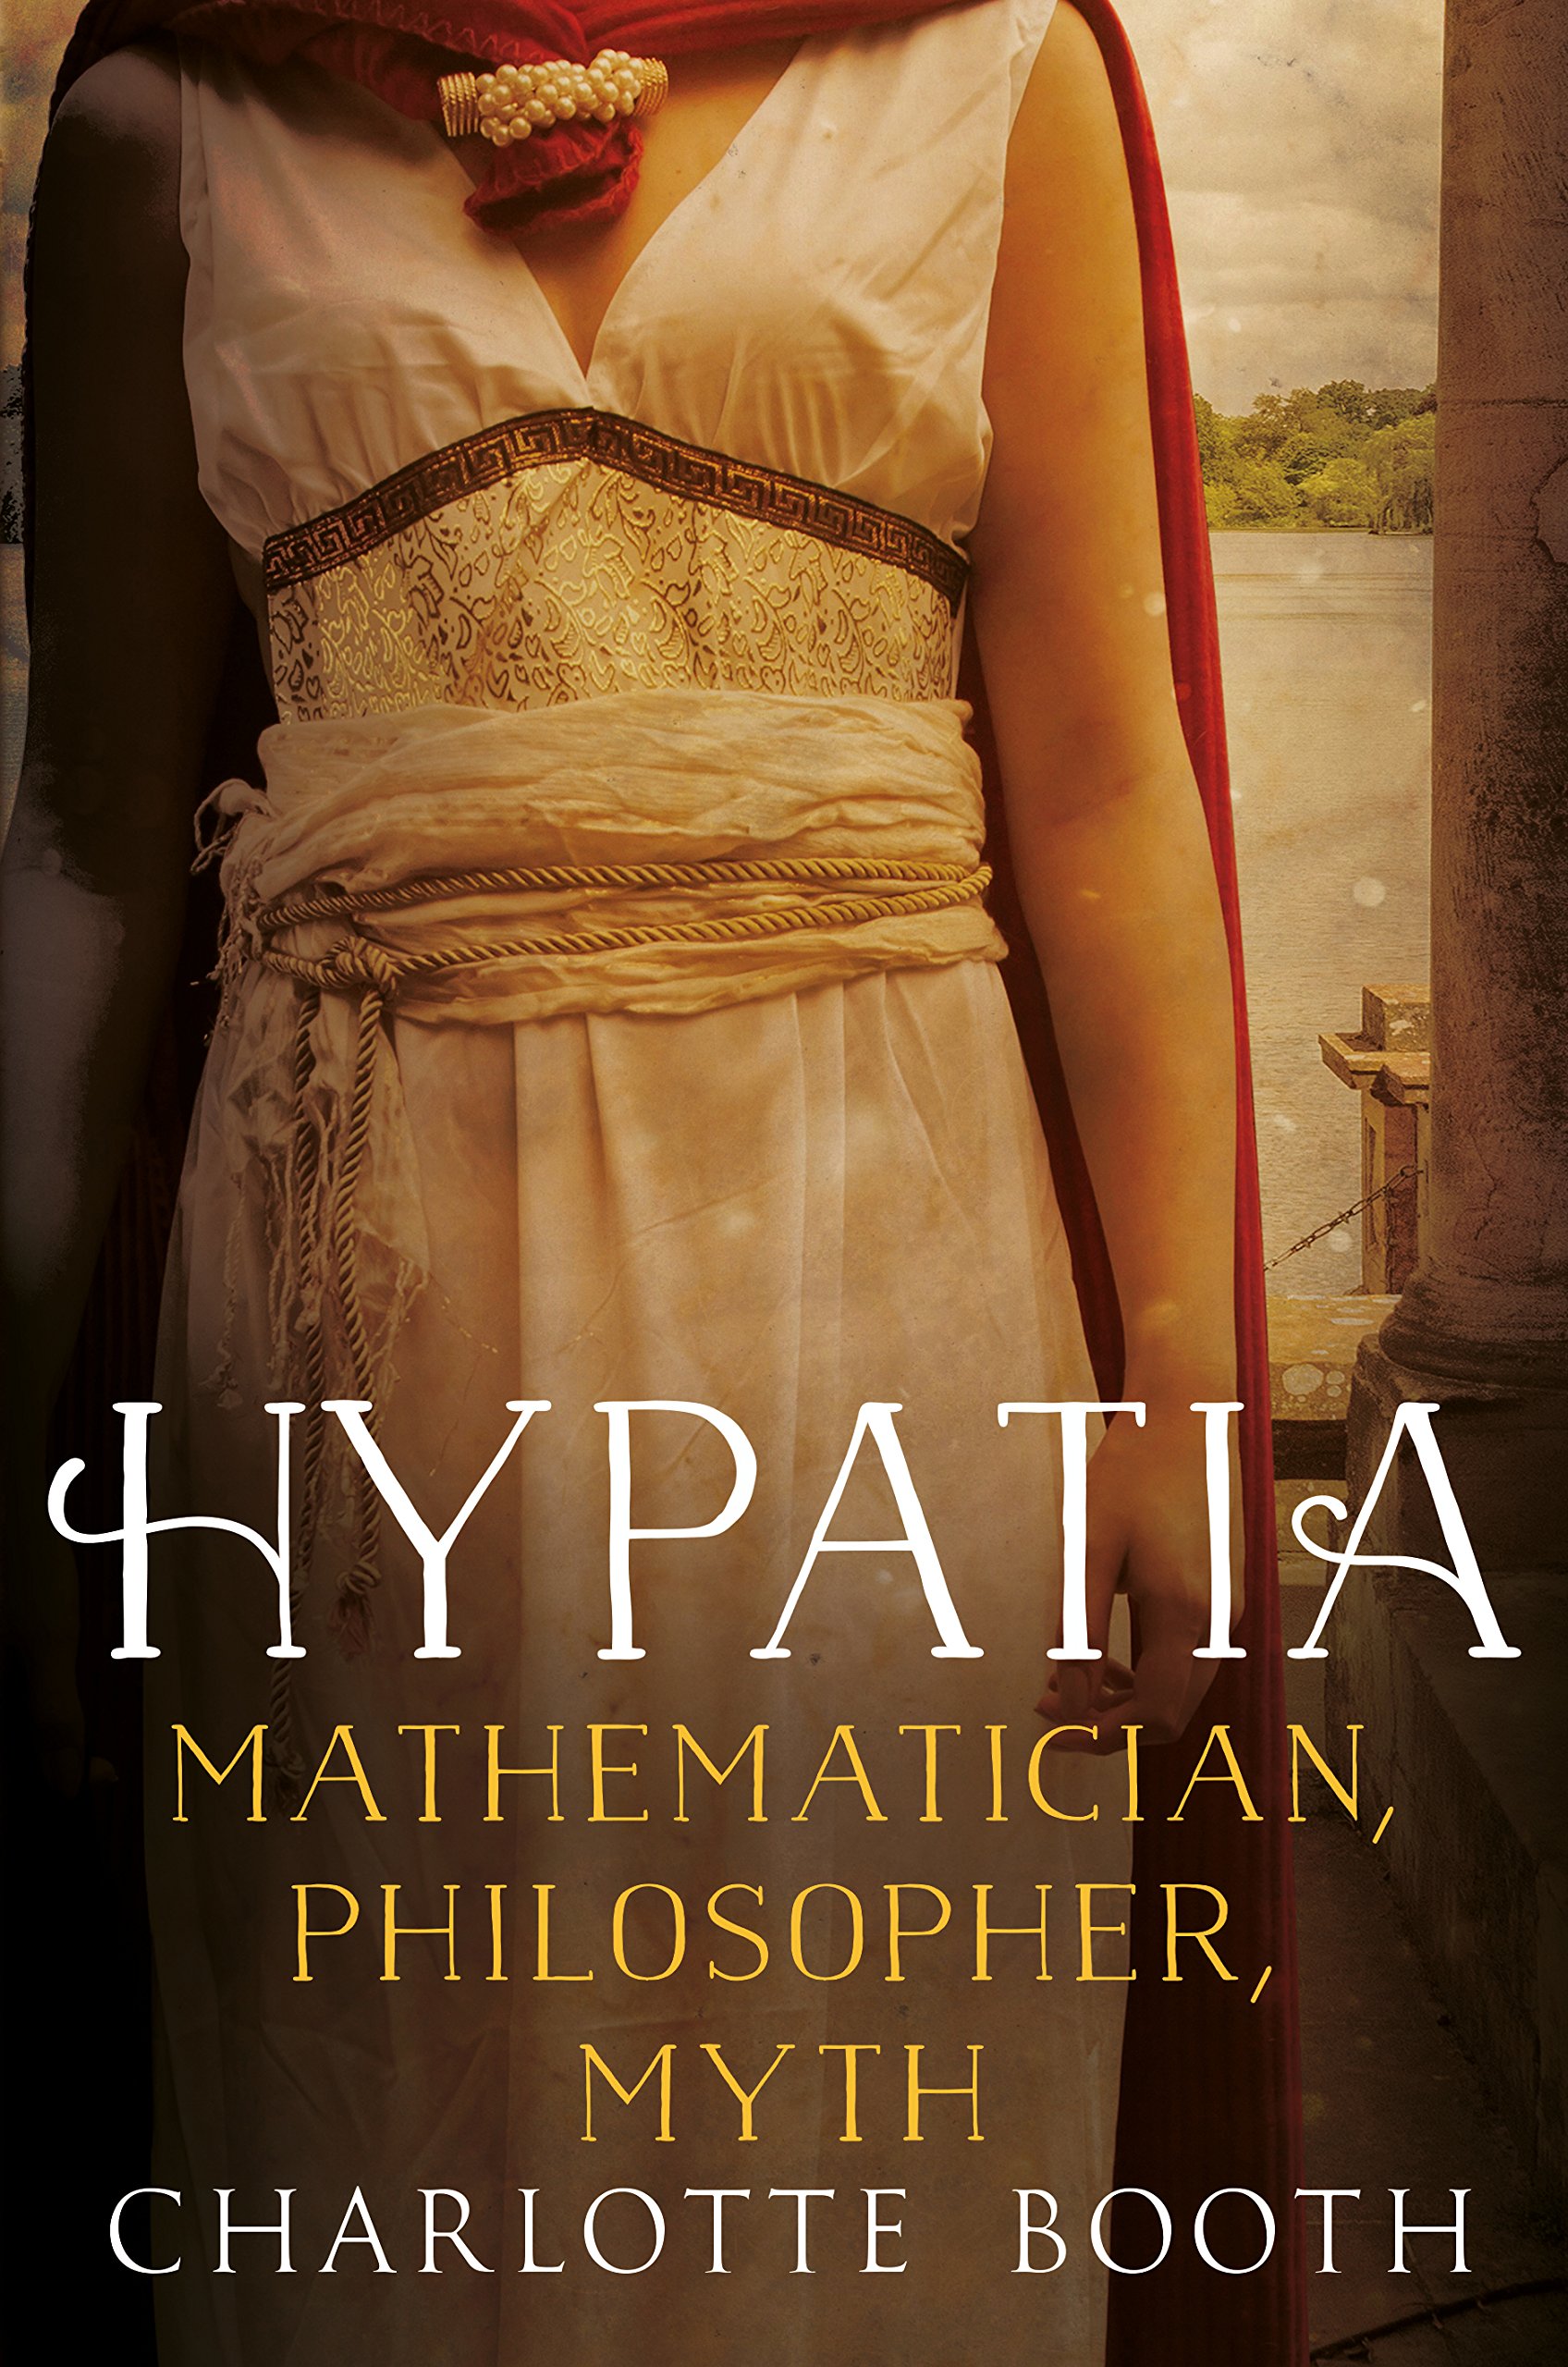 Hypatia Mathematician Philosopher Myth Charlotte Booth